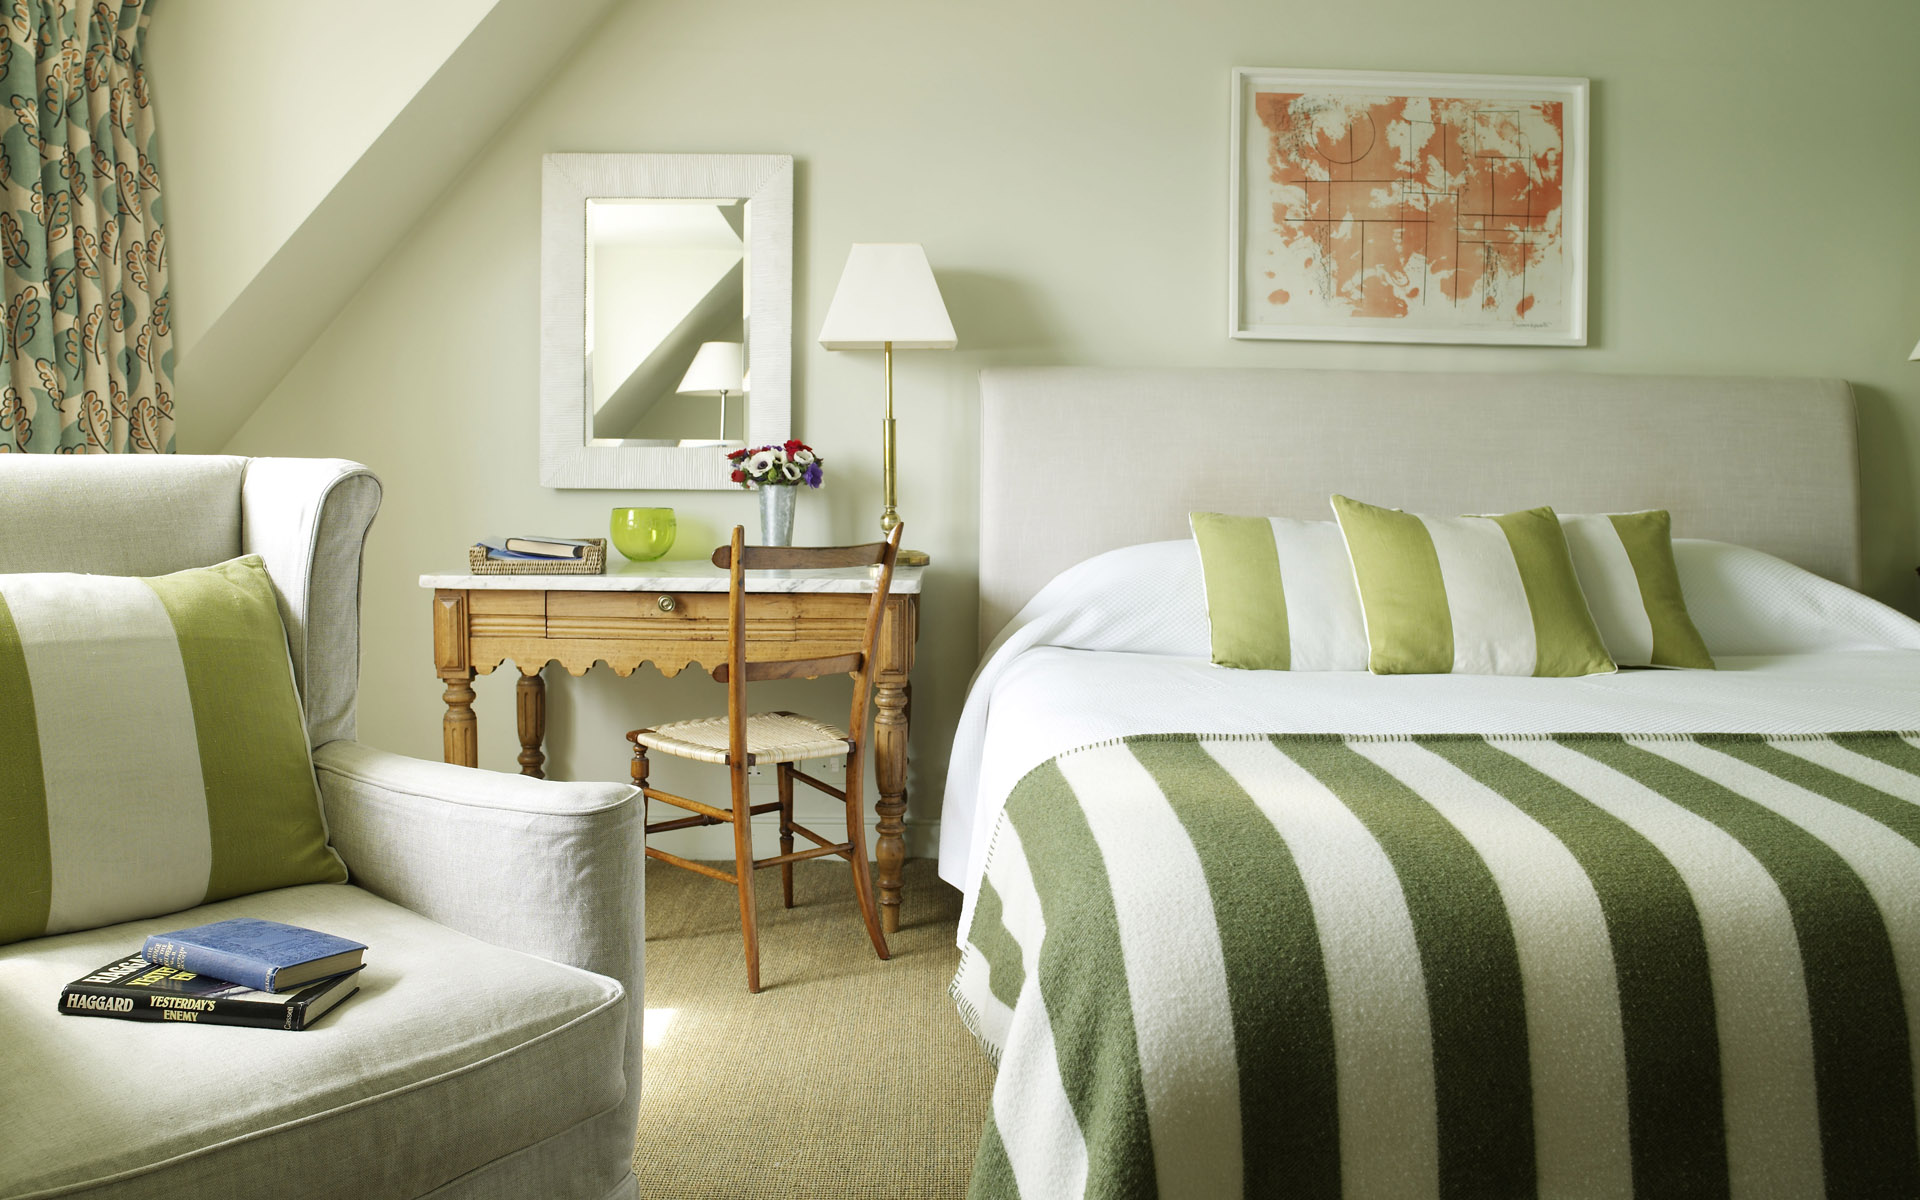 Download High quality Design Bedrooms wallpaper / Photo Art / 1920x1200